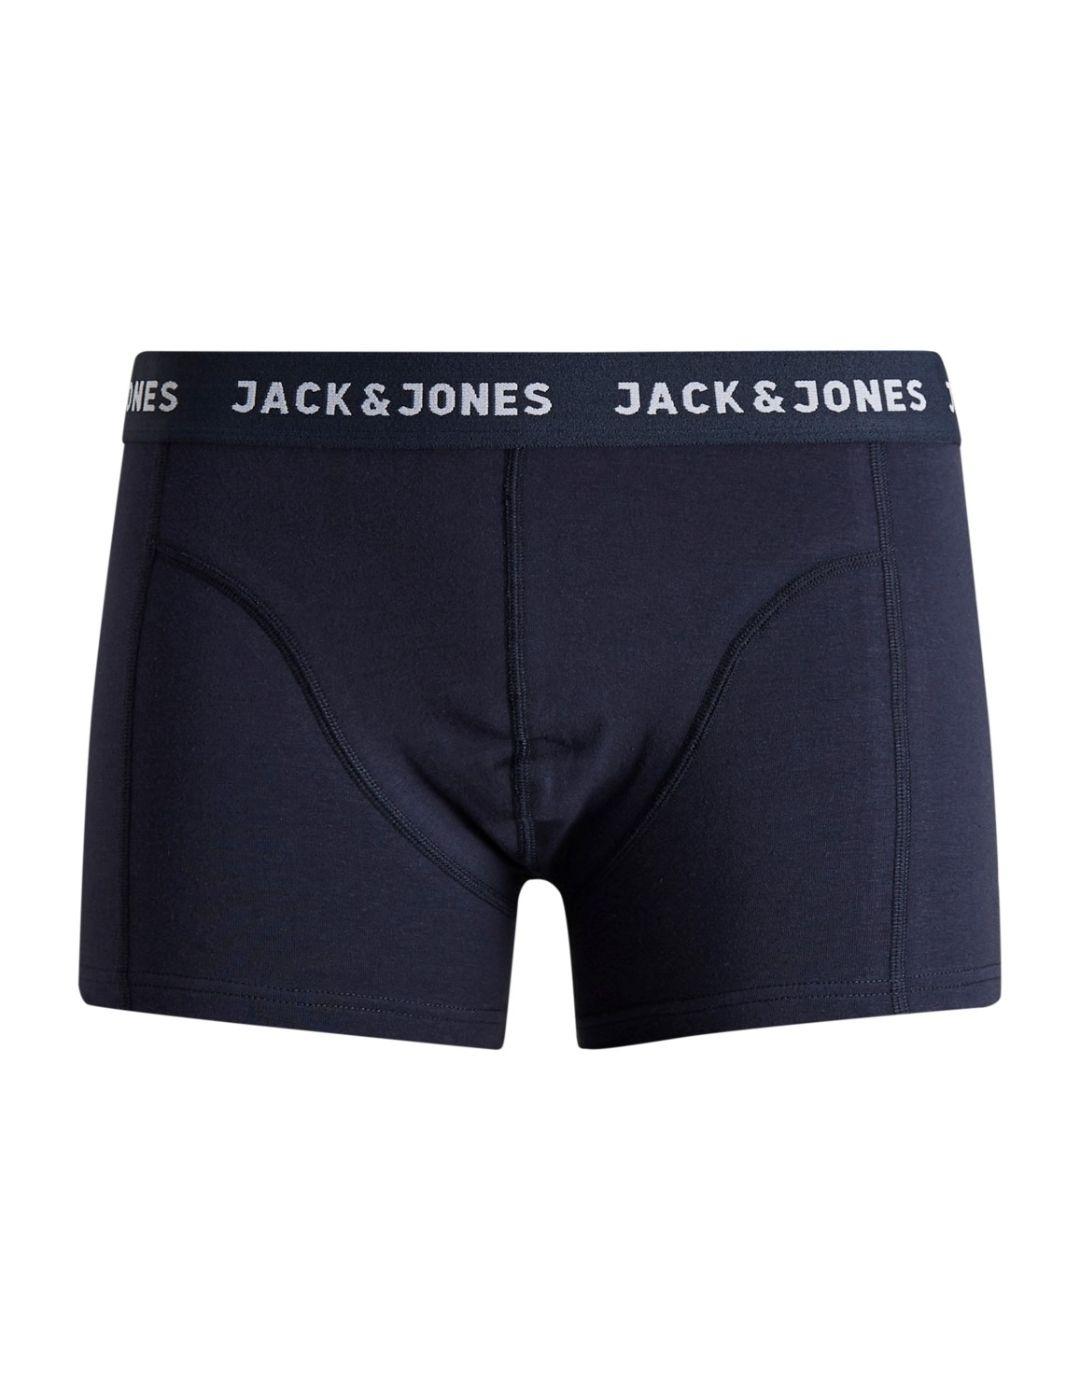 Calzoncillos Jack-Jones Anthony trunks hombre -a